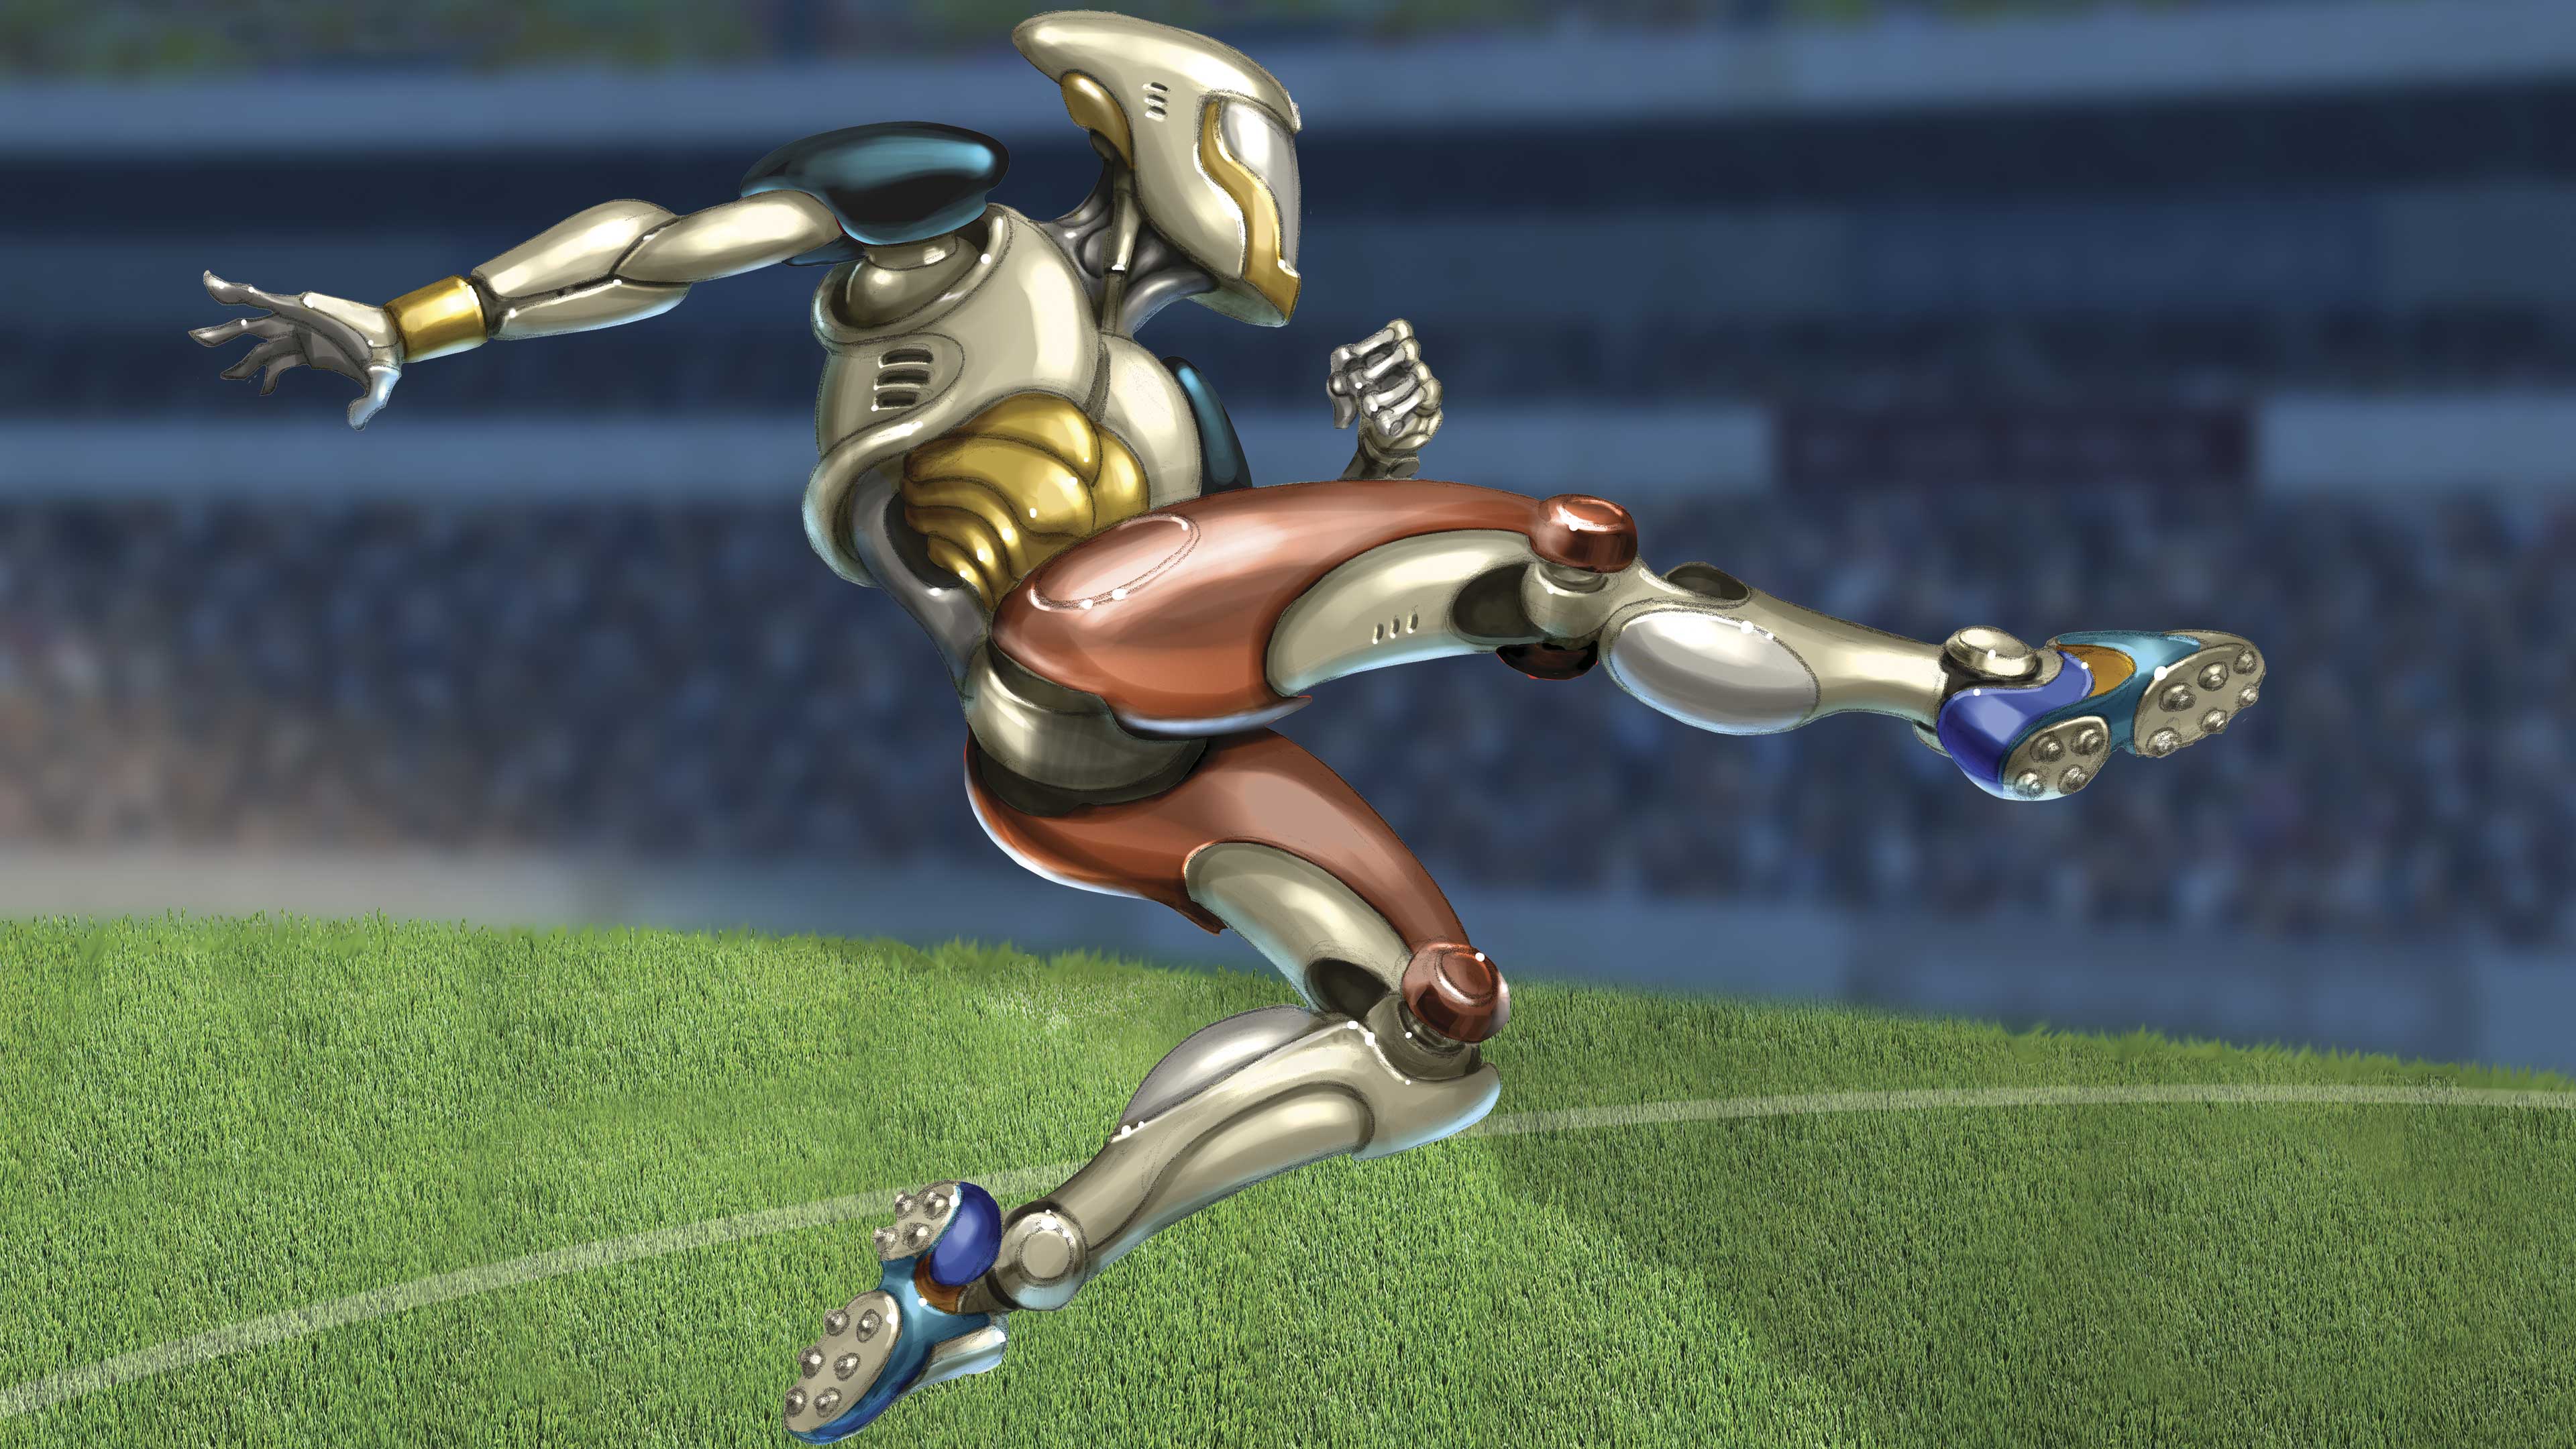 Imagen de Robots que juegan al futbol